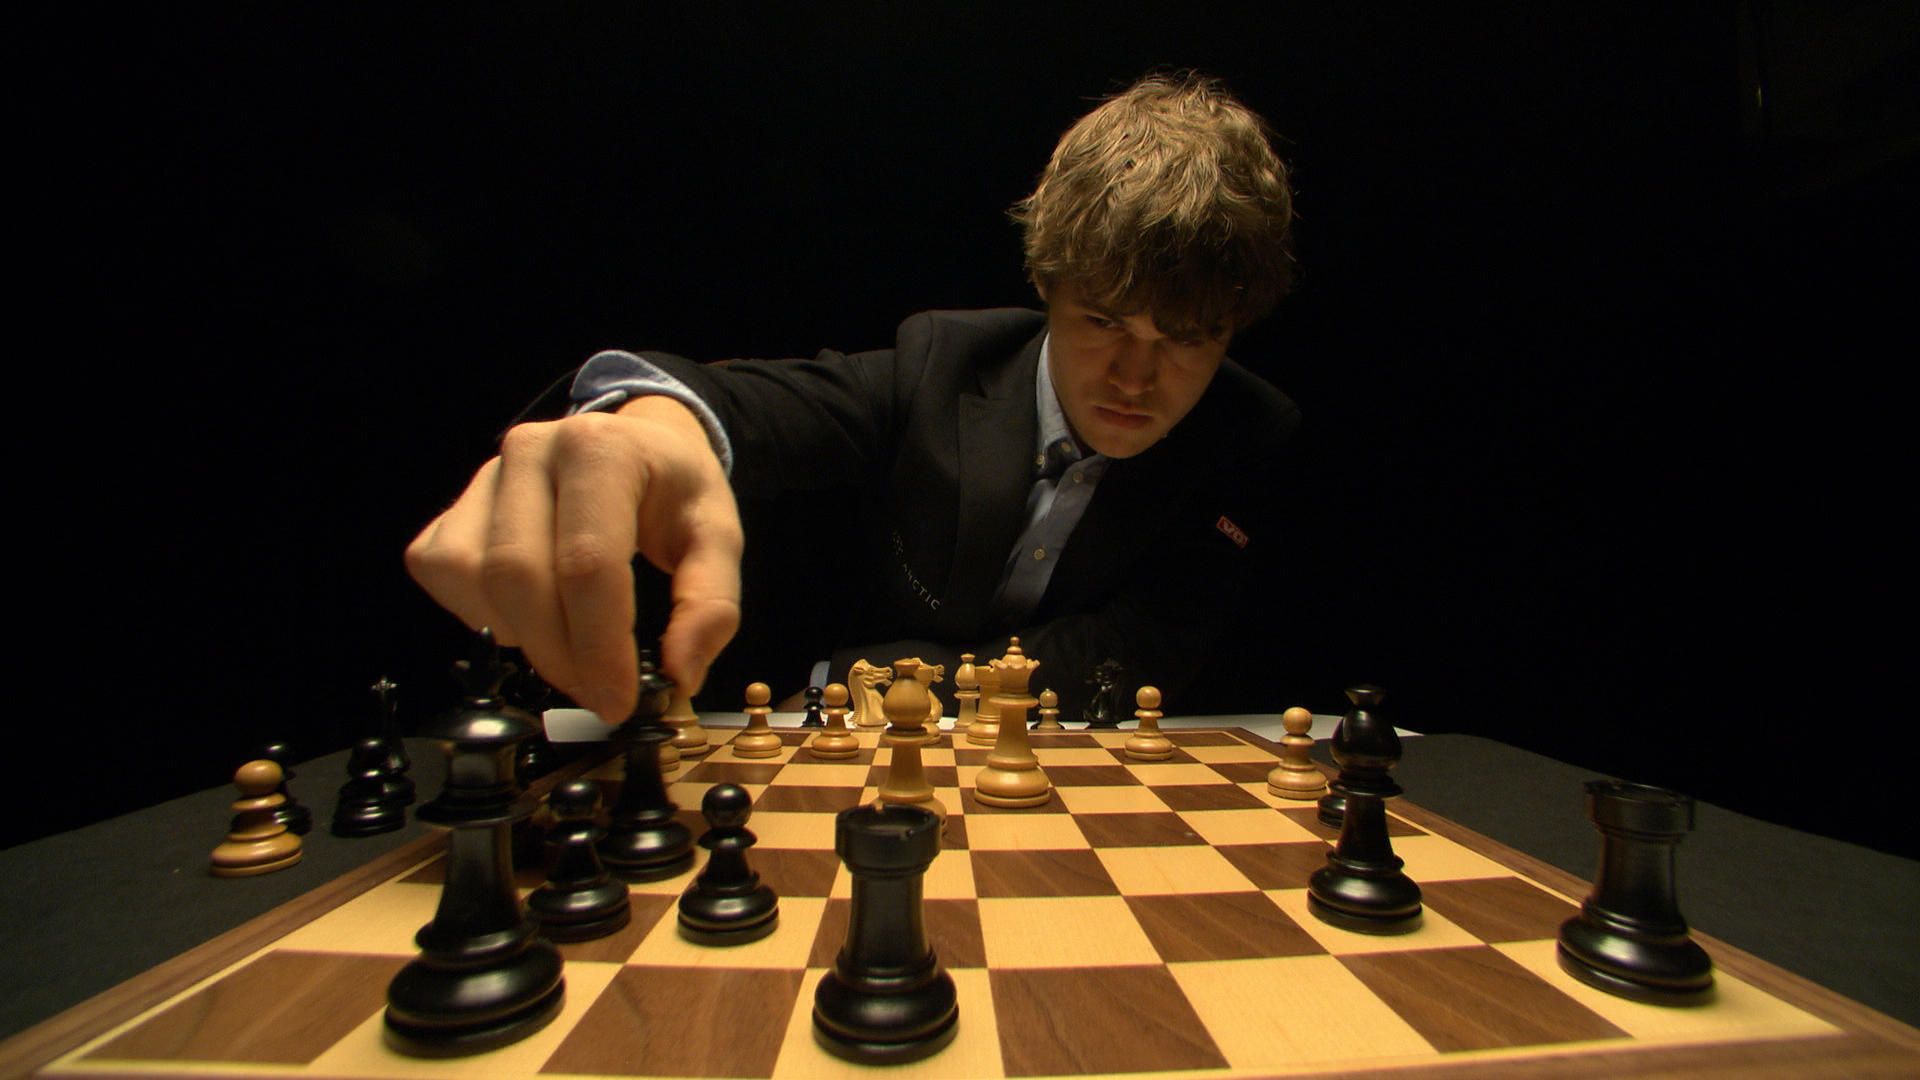 Chess is a game. Карлсен шахматы 960. Магнус Чесс. Шахматисты за игрой. Человек за шахматами.